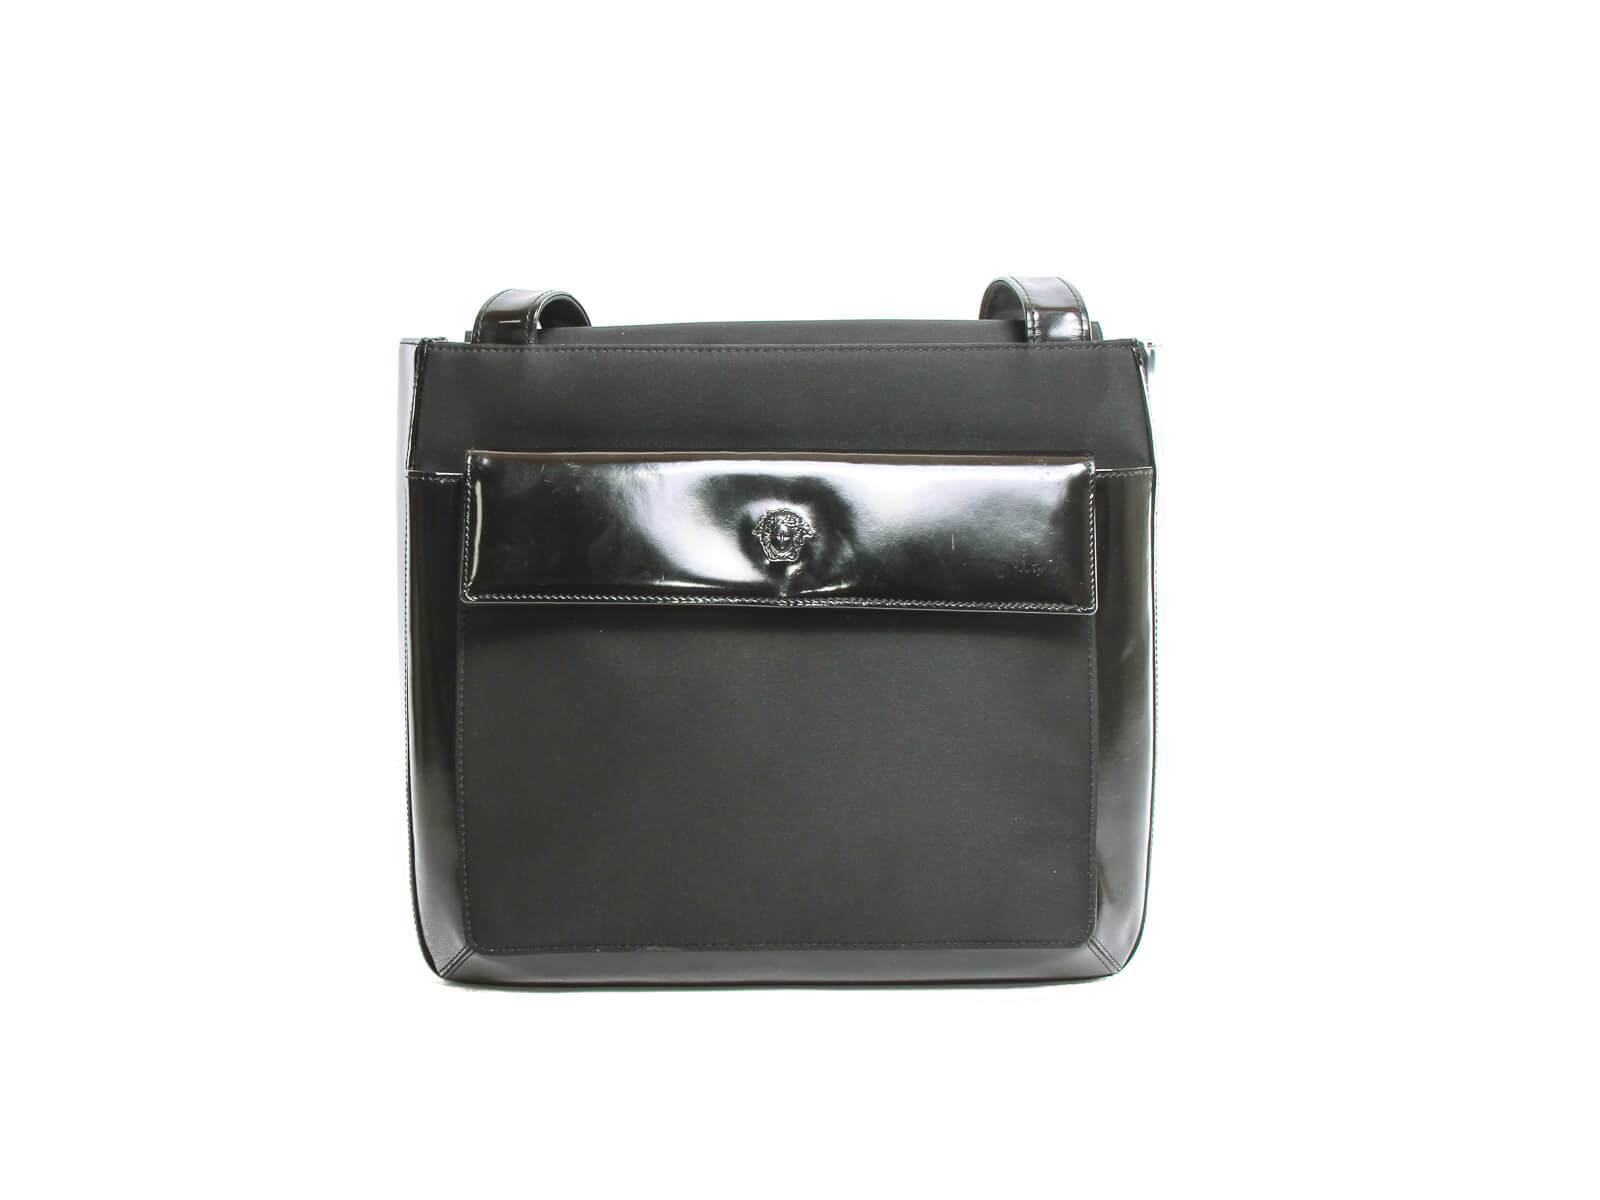 Versace Patent Leather Handbags